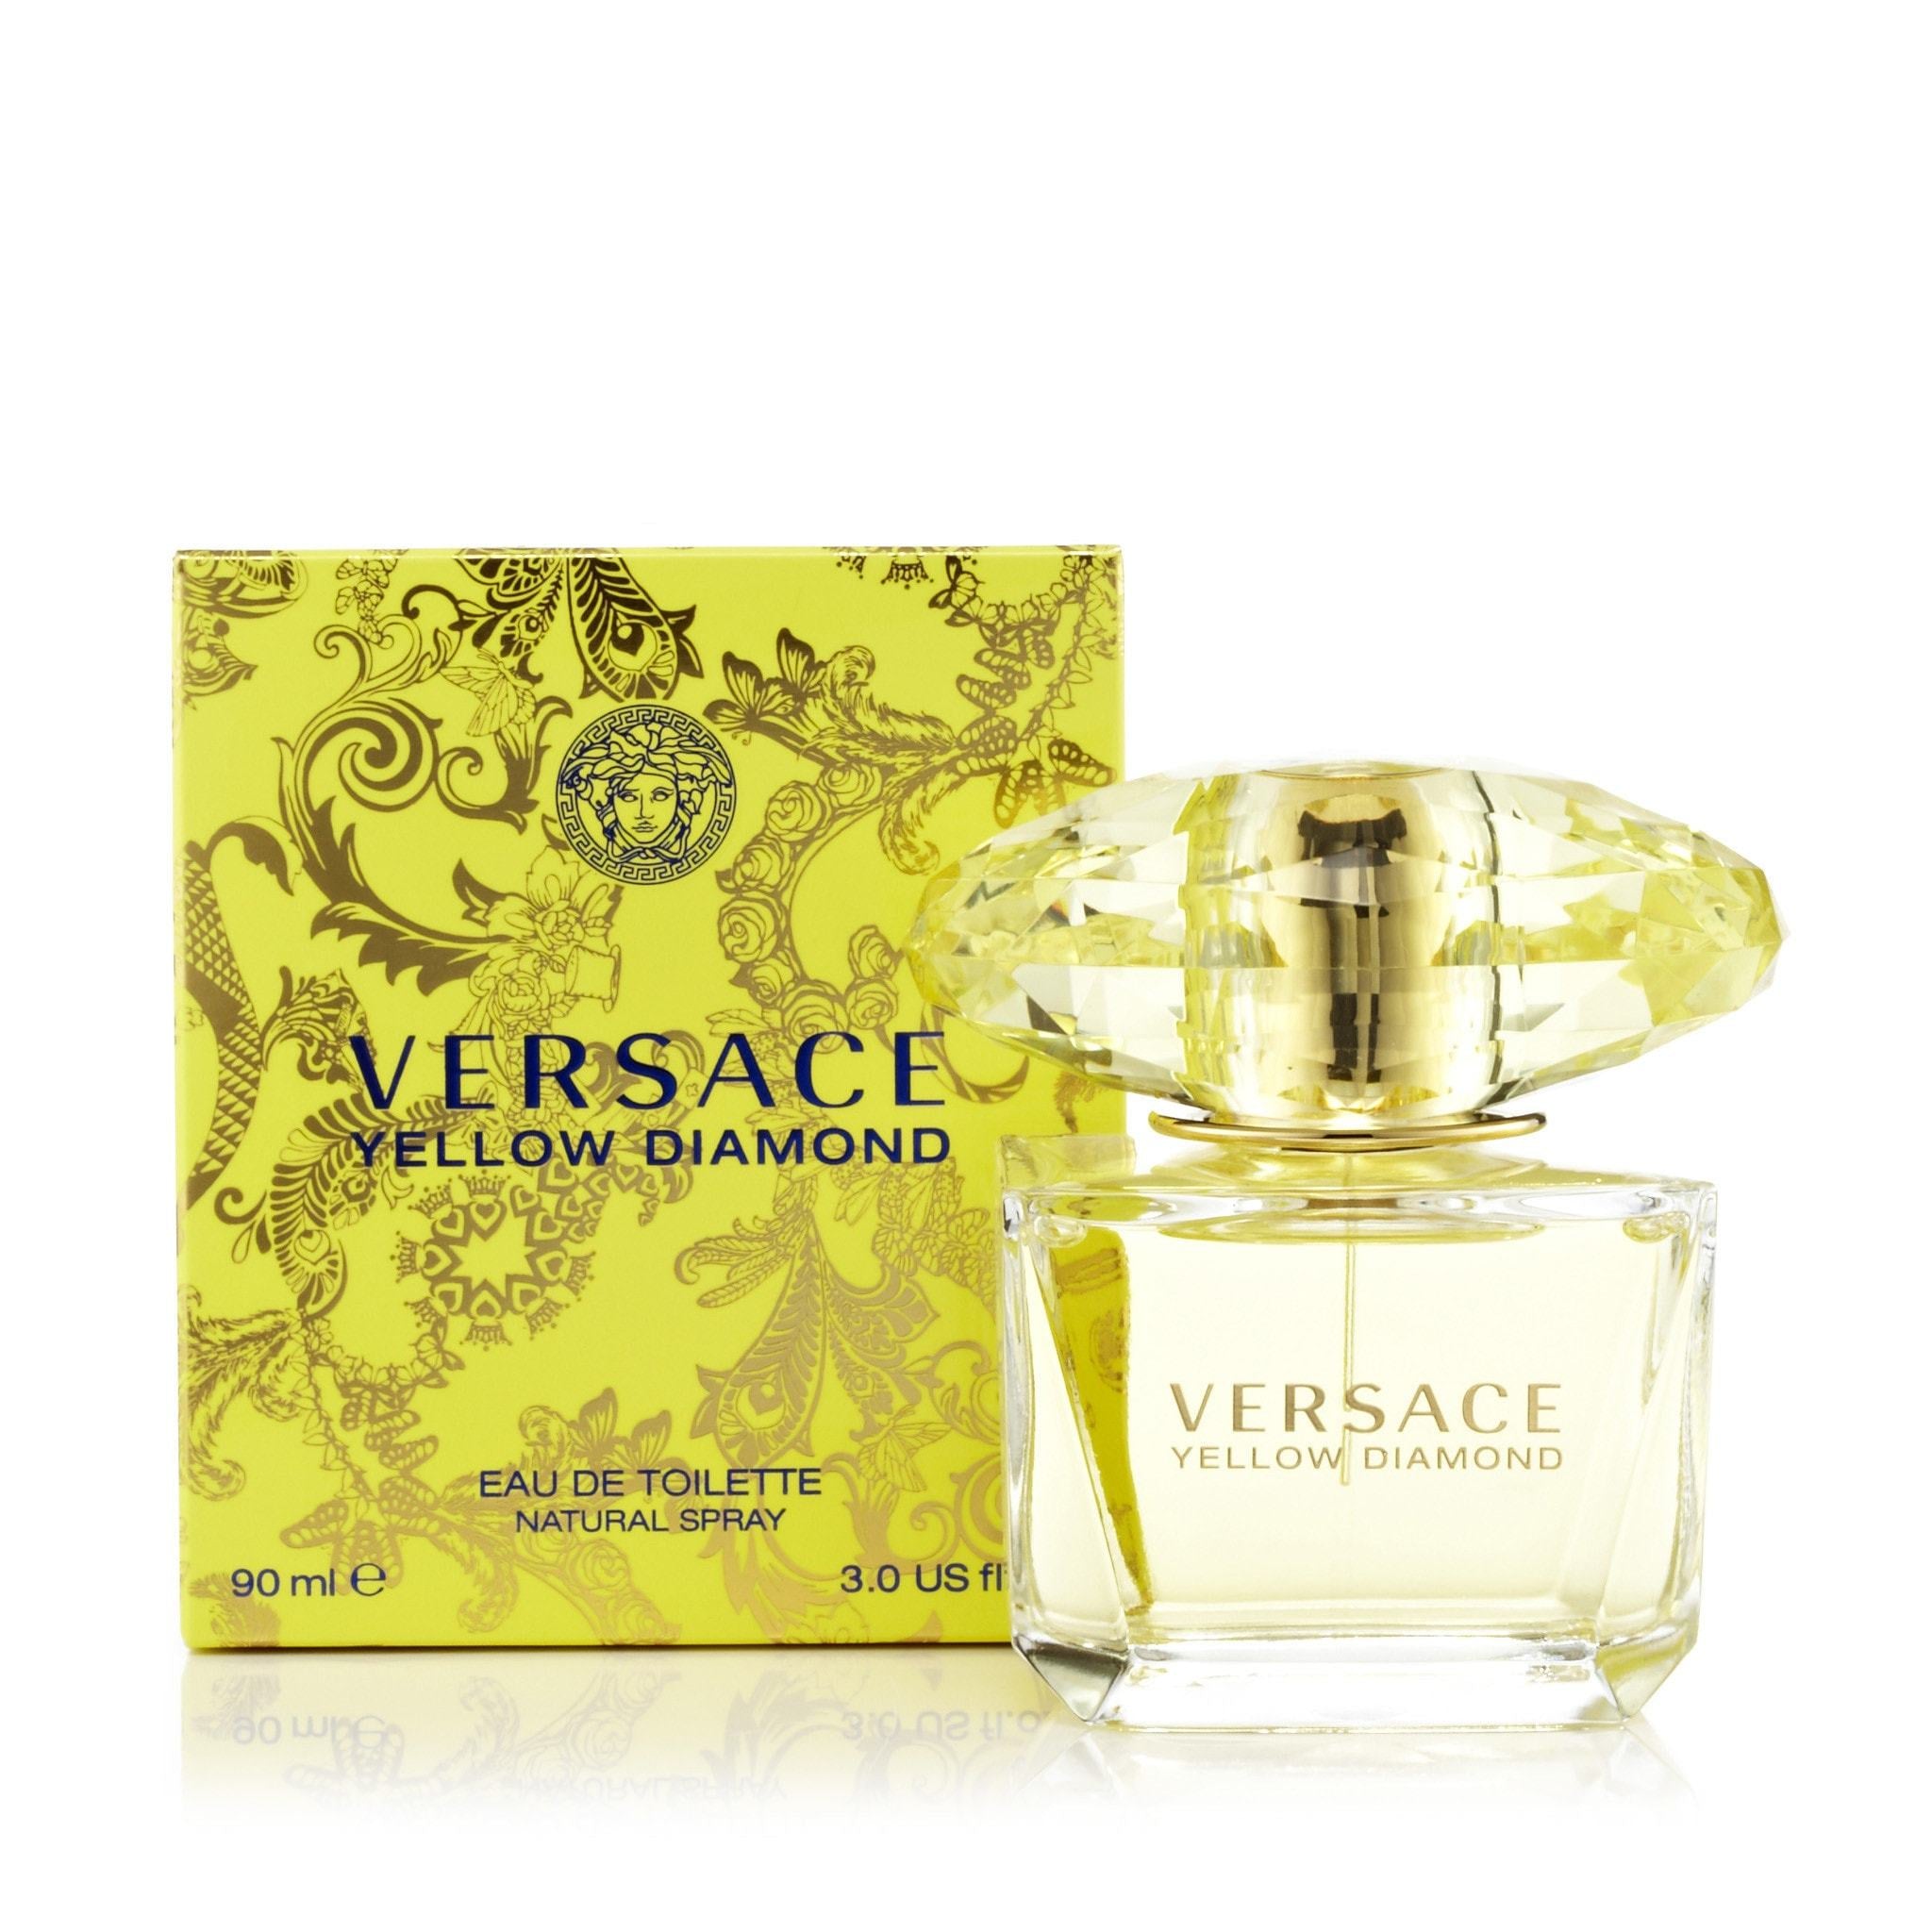 versace perfume yellow diamond